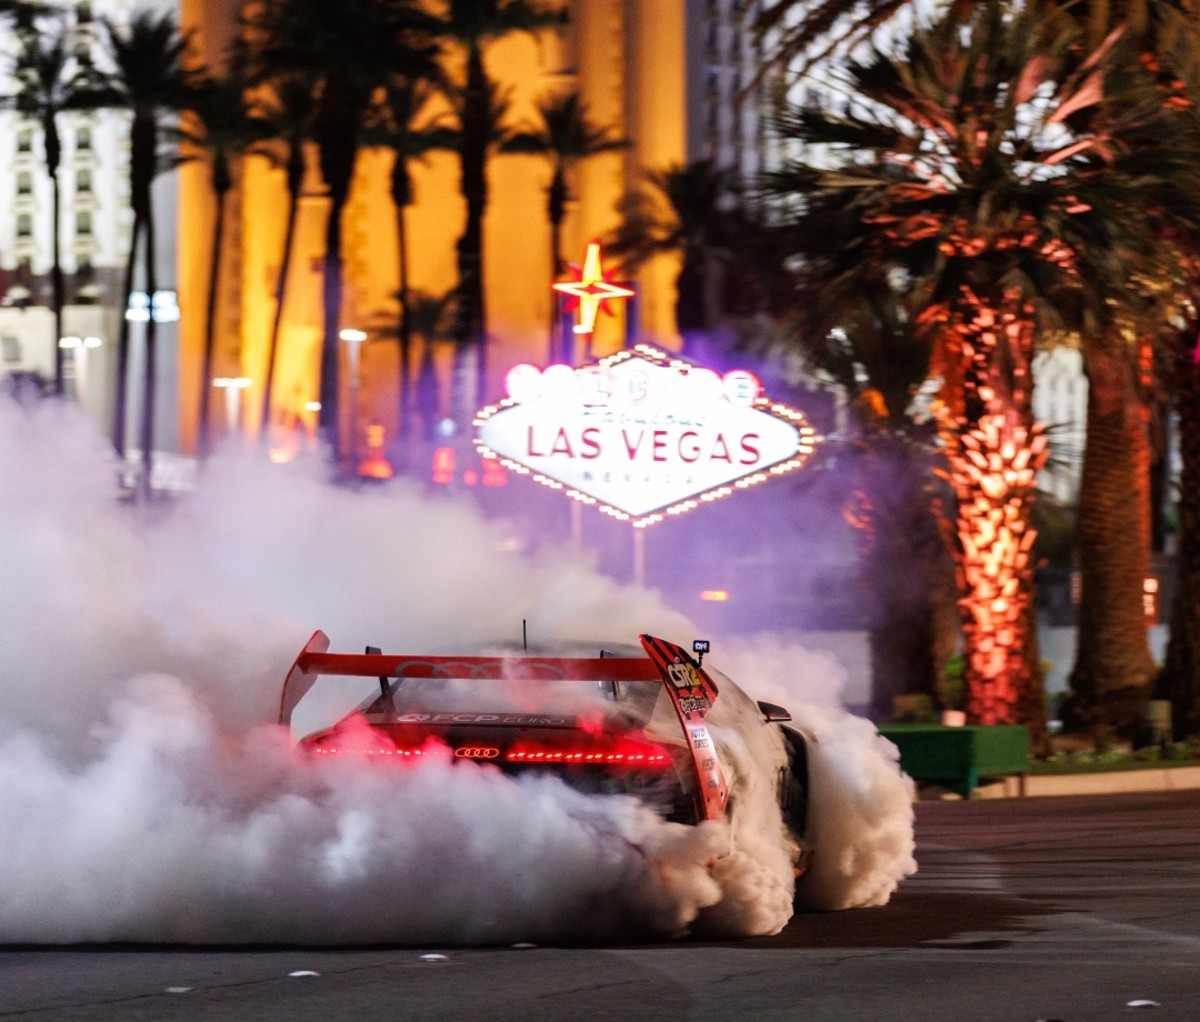 Ken Block's Audi Hoonitron EV racing car shreds tires in front of a Las Vegas sign.